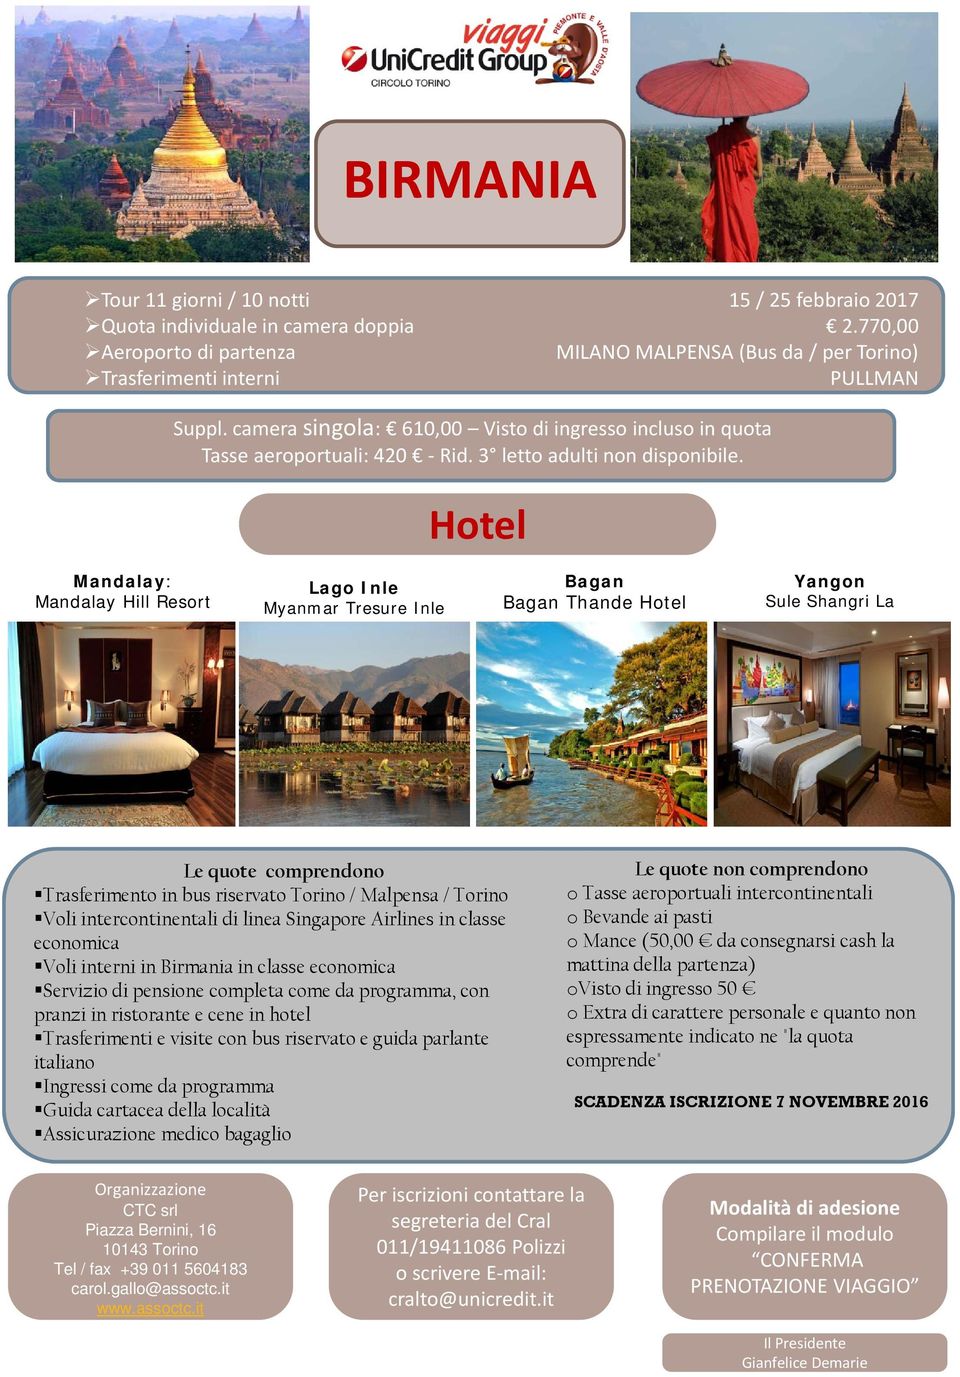 Hotel Mandalay: Mandalay Hill Resort Lago Inle Myanmar Tresure Inle Bagan Bagan Thande Hotel Yangon Sule Shangri La Le quote comprendono Trasferimento in bus riservato Torino / Malpensa / Torino Voli